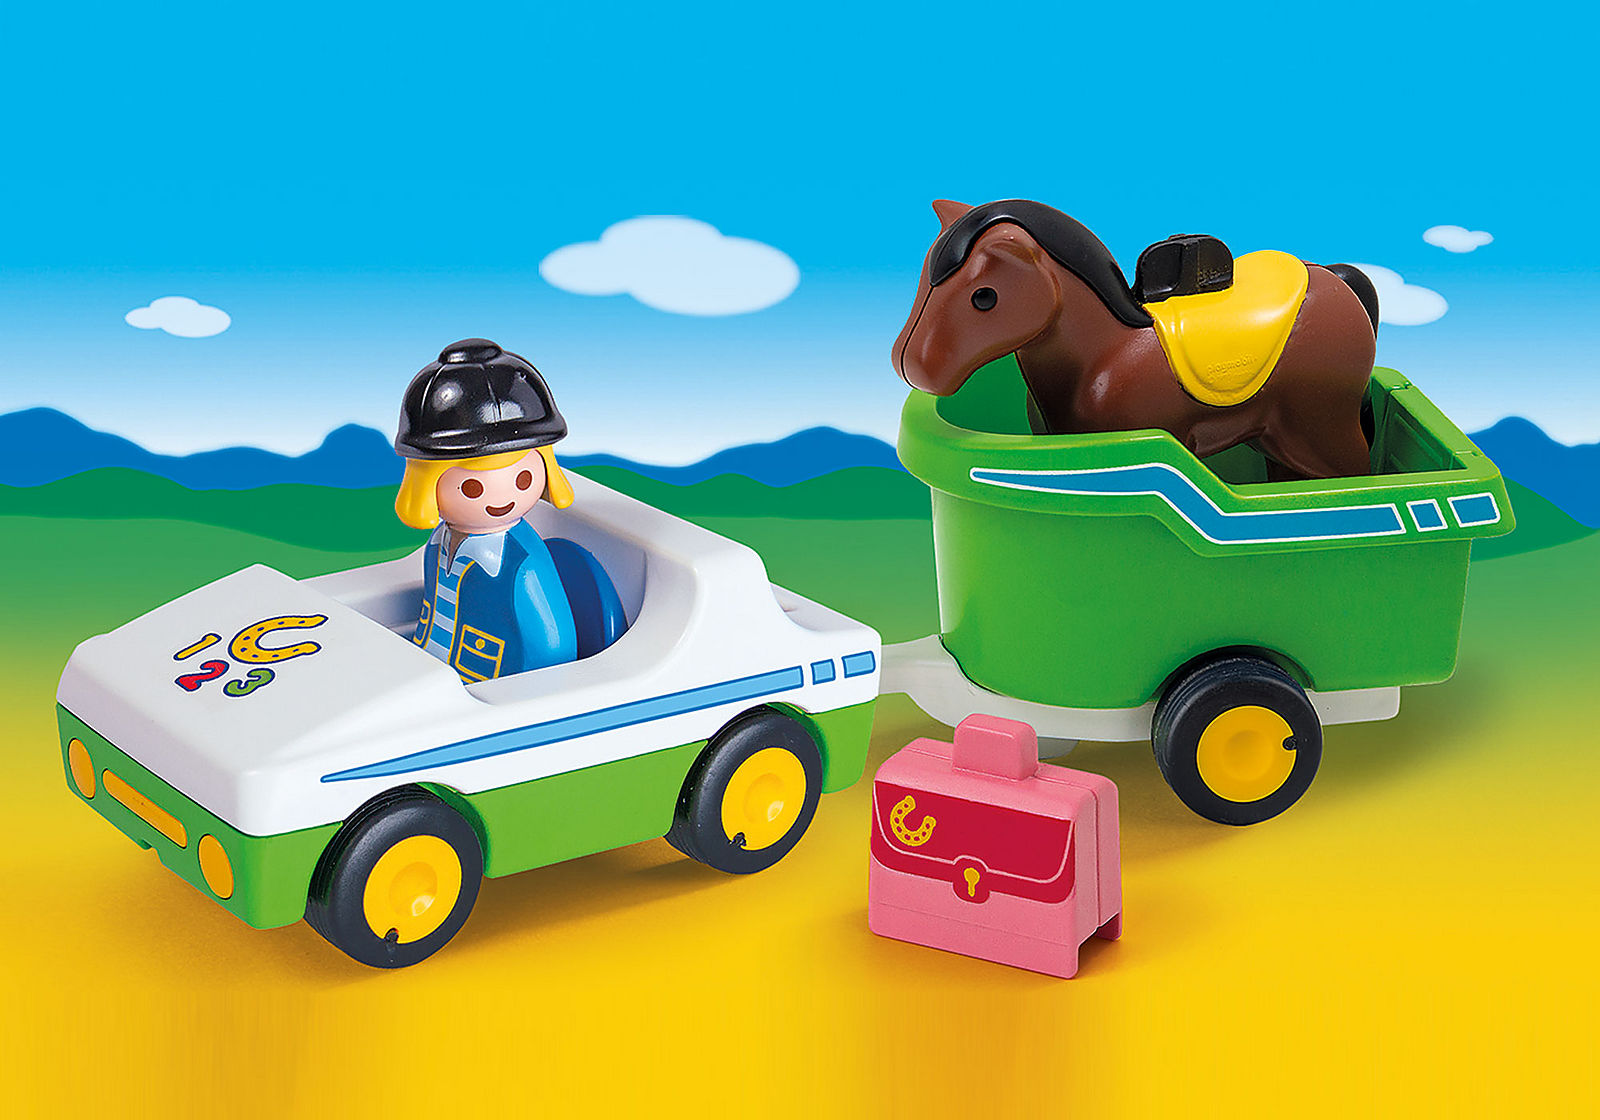 Playmobil 1.2.3 - Όχημα Με Τρέιλερ Μεταφοράς Αλόγου 70181